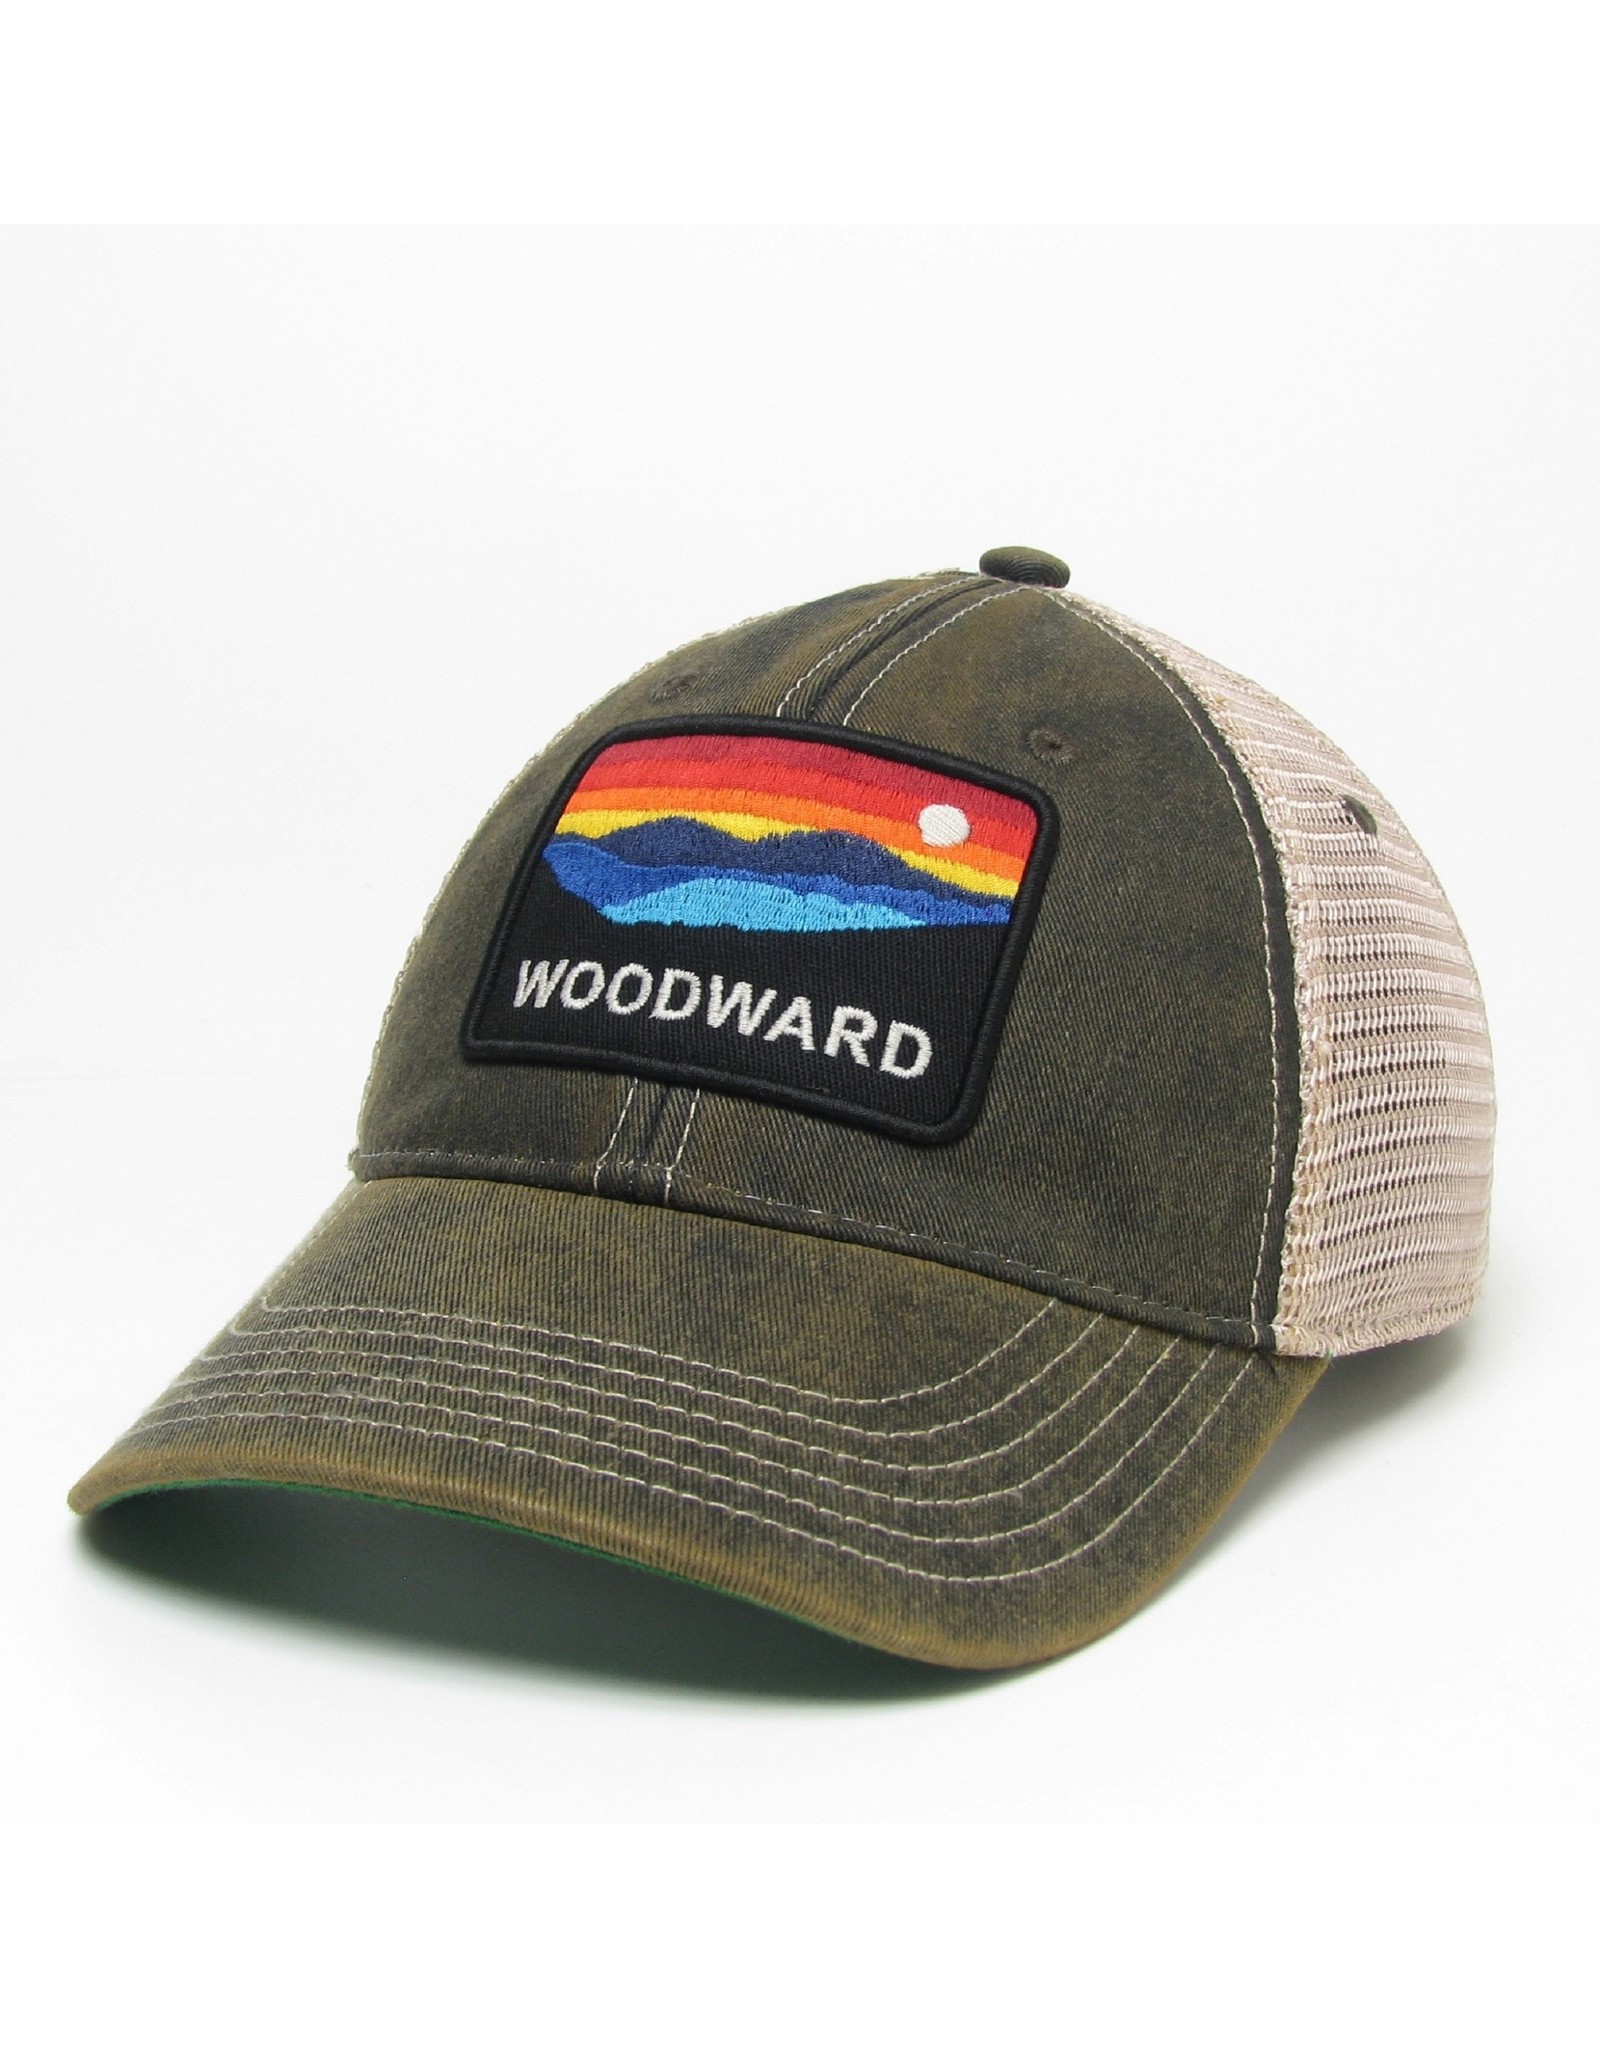 L2 Brands Cap Old Favorite Woodward Horizon Trucker